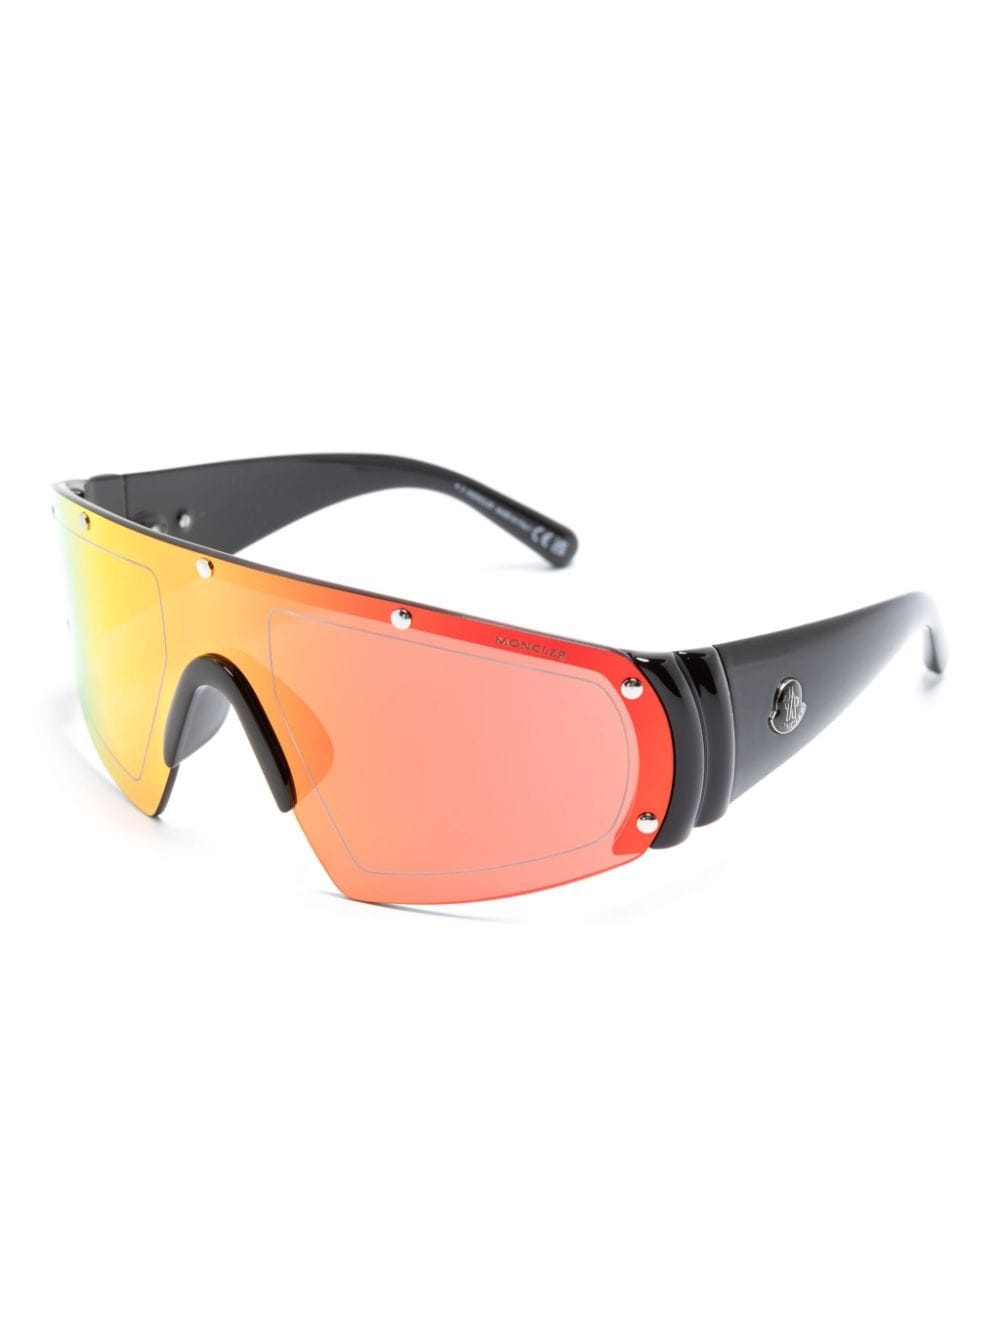 shield-frame mirrored sunglasses - 2